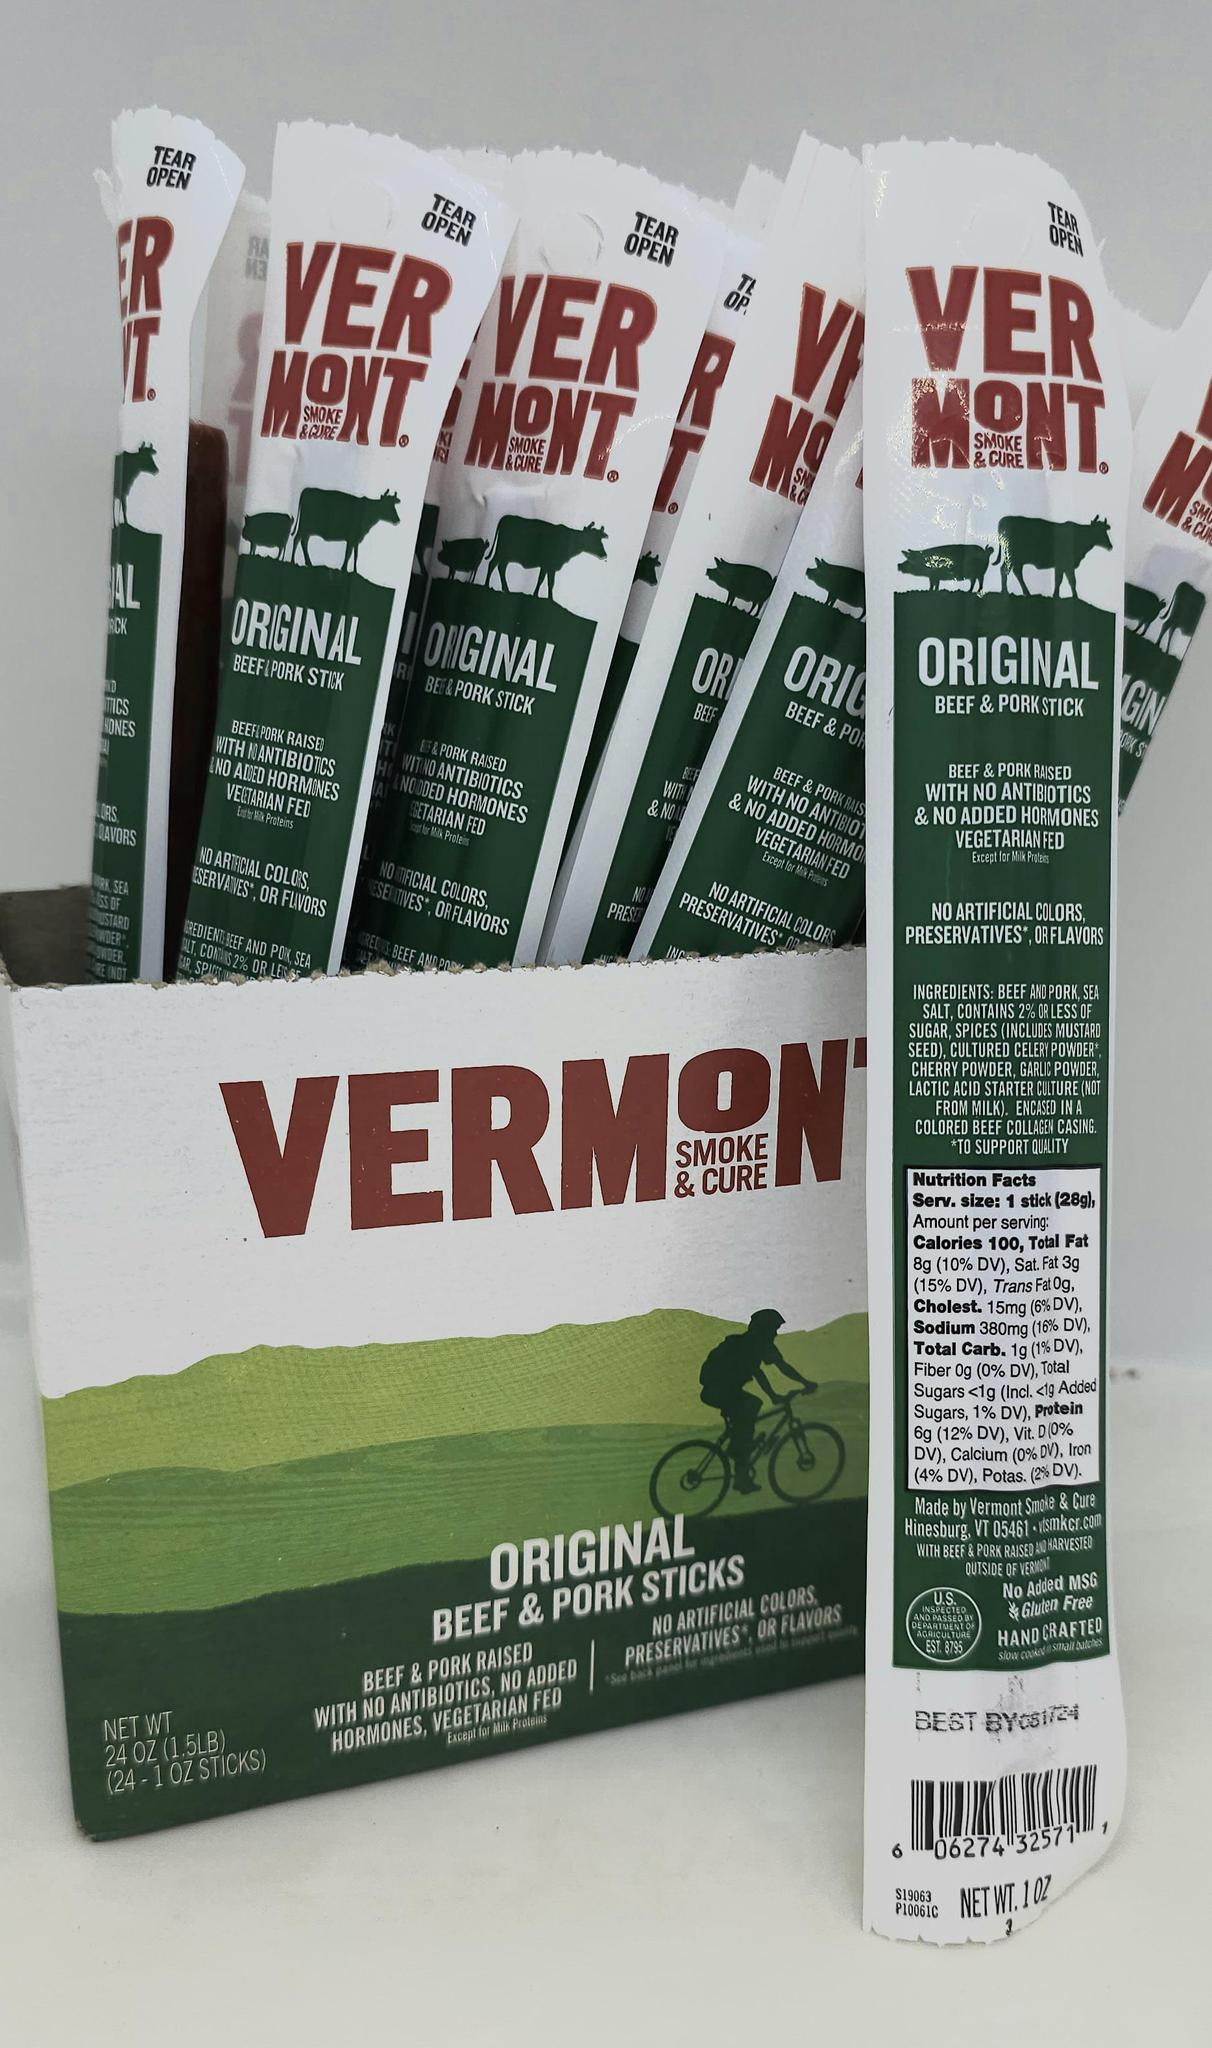 Vermont Smoke & Cure Original Beef & Pork Sticks